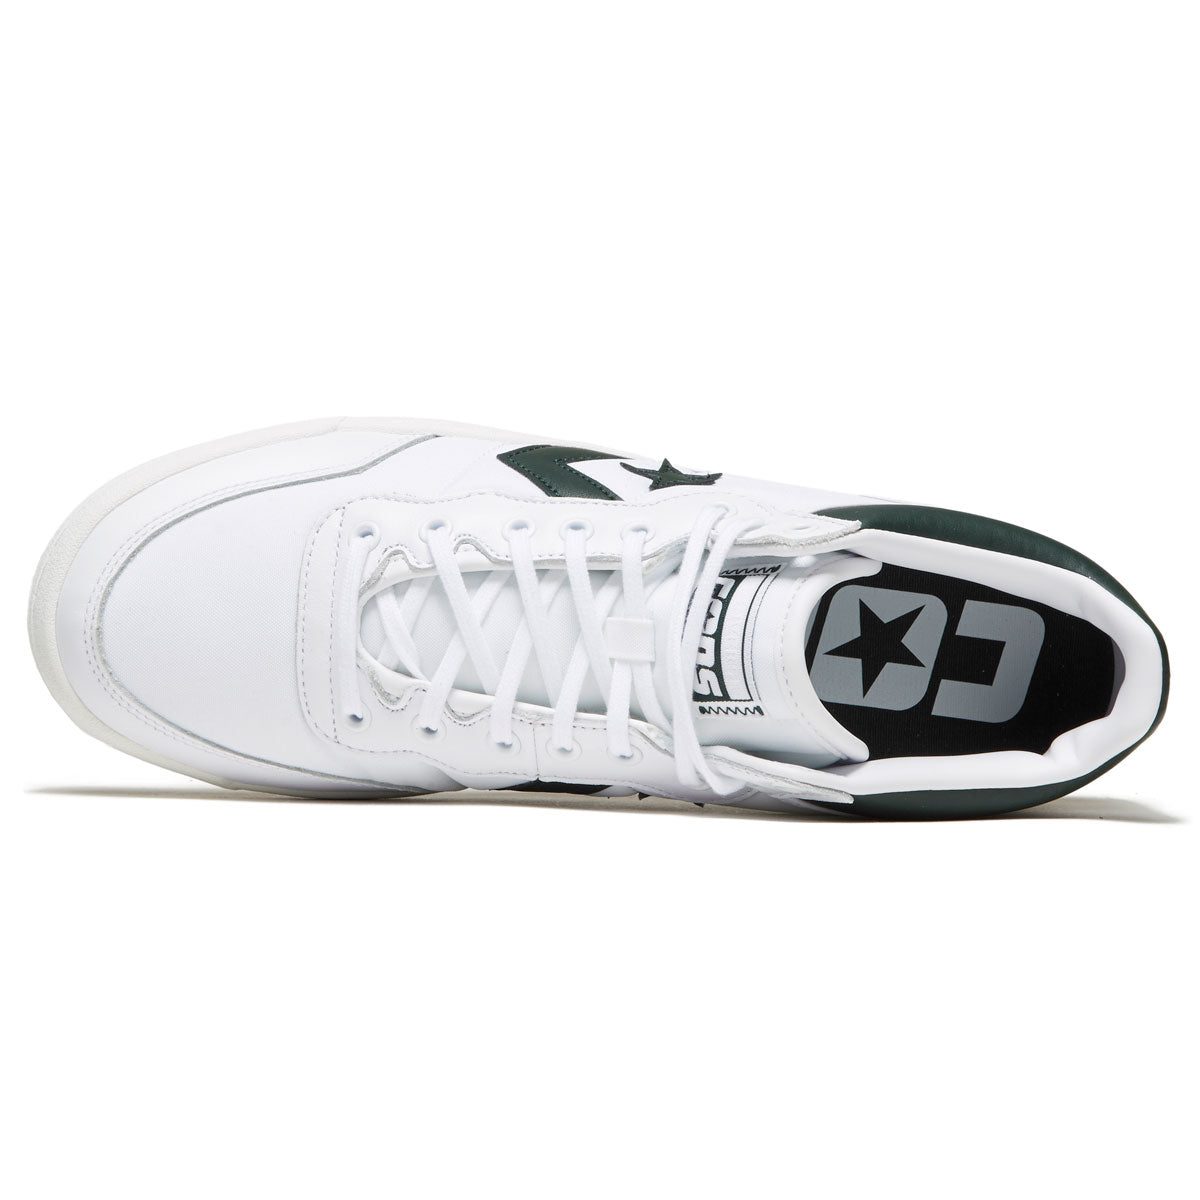 Converse Fastbreak Pro Leather Mid Shoes - White/Deep Emerald/Gum image 3